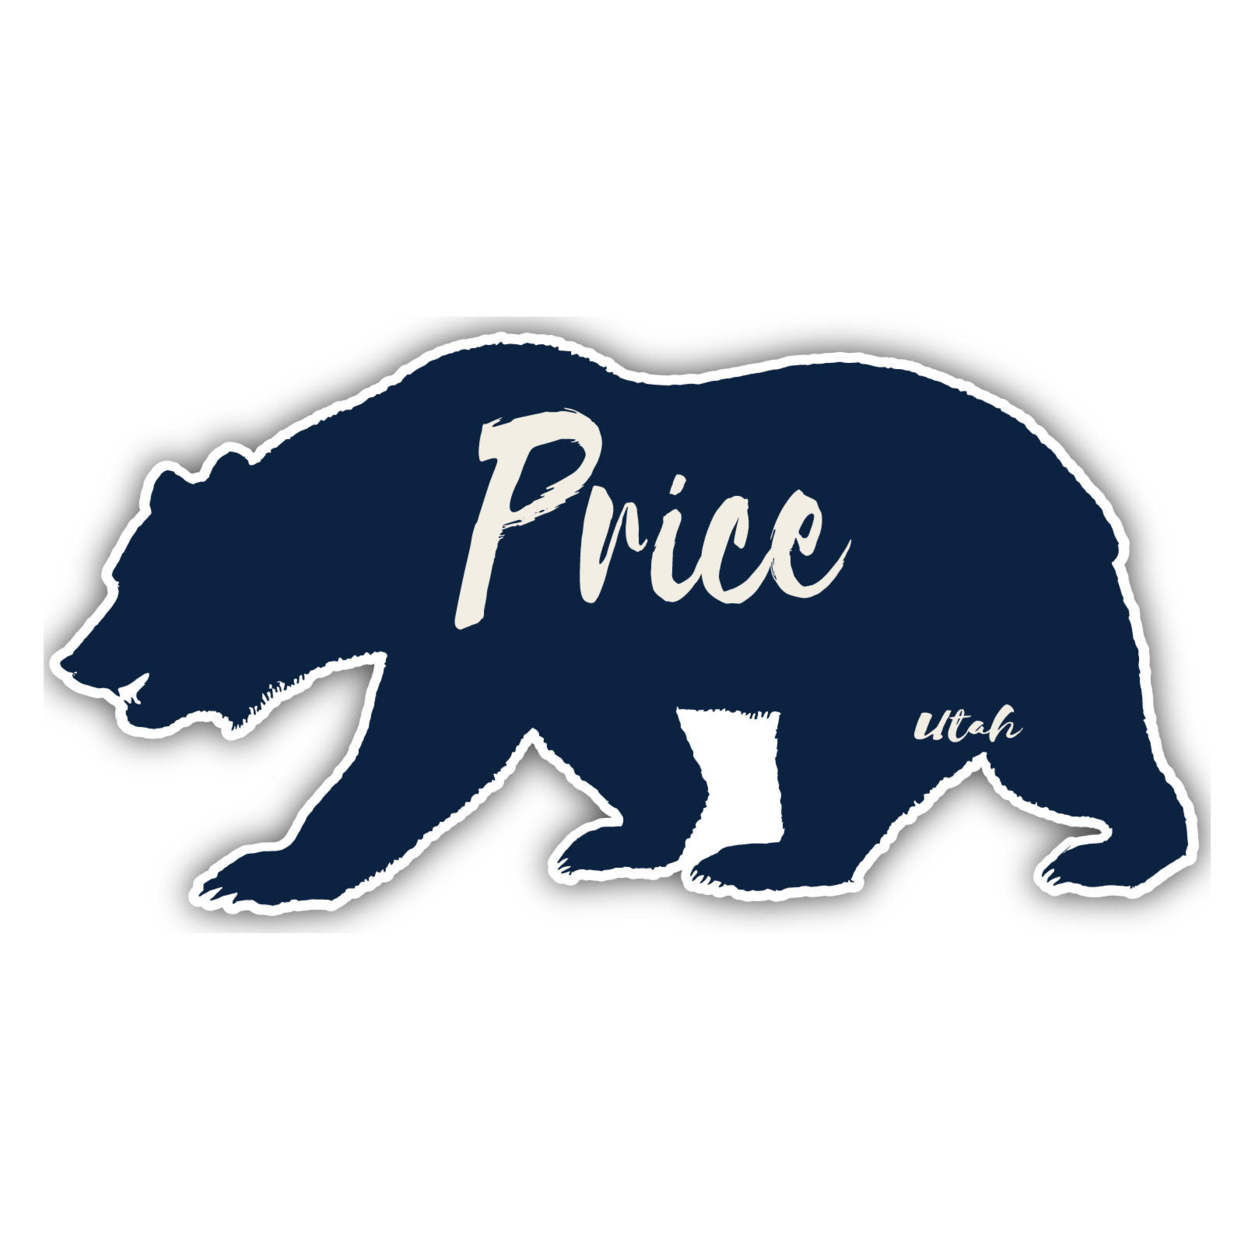 Price Utah Souvenir Decorative Stickers (Choose Theme And Size) - Single Unit, 4-Inch, Tent